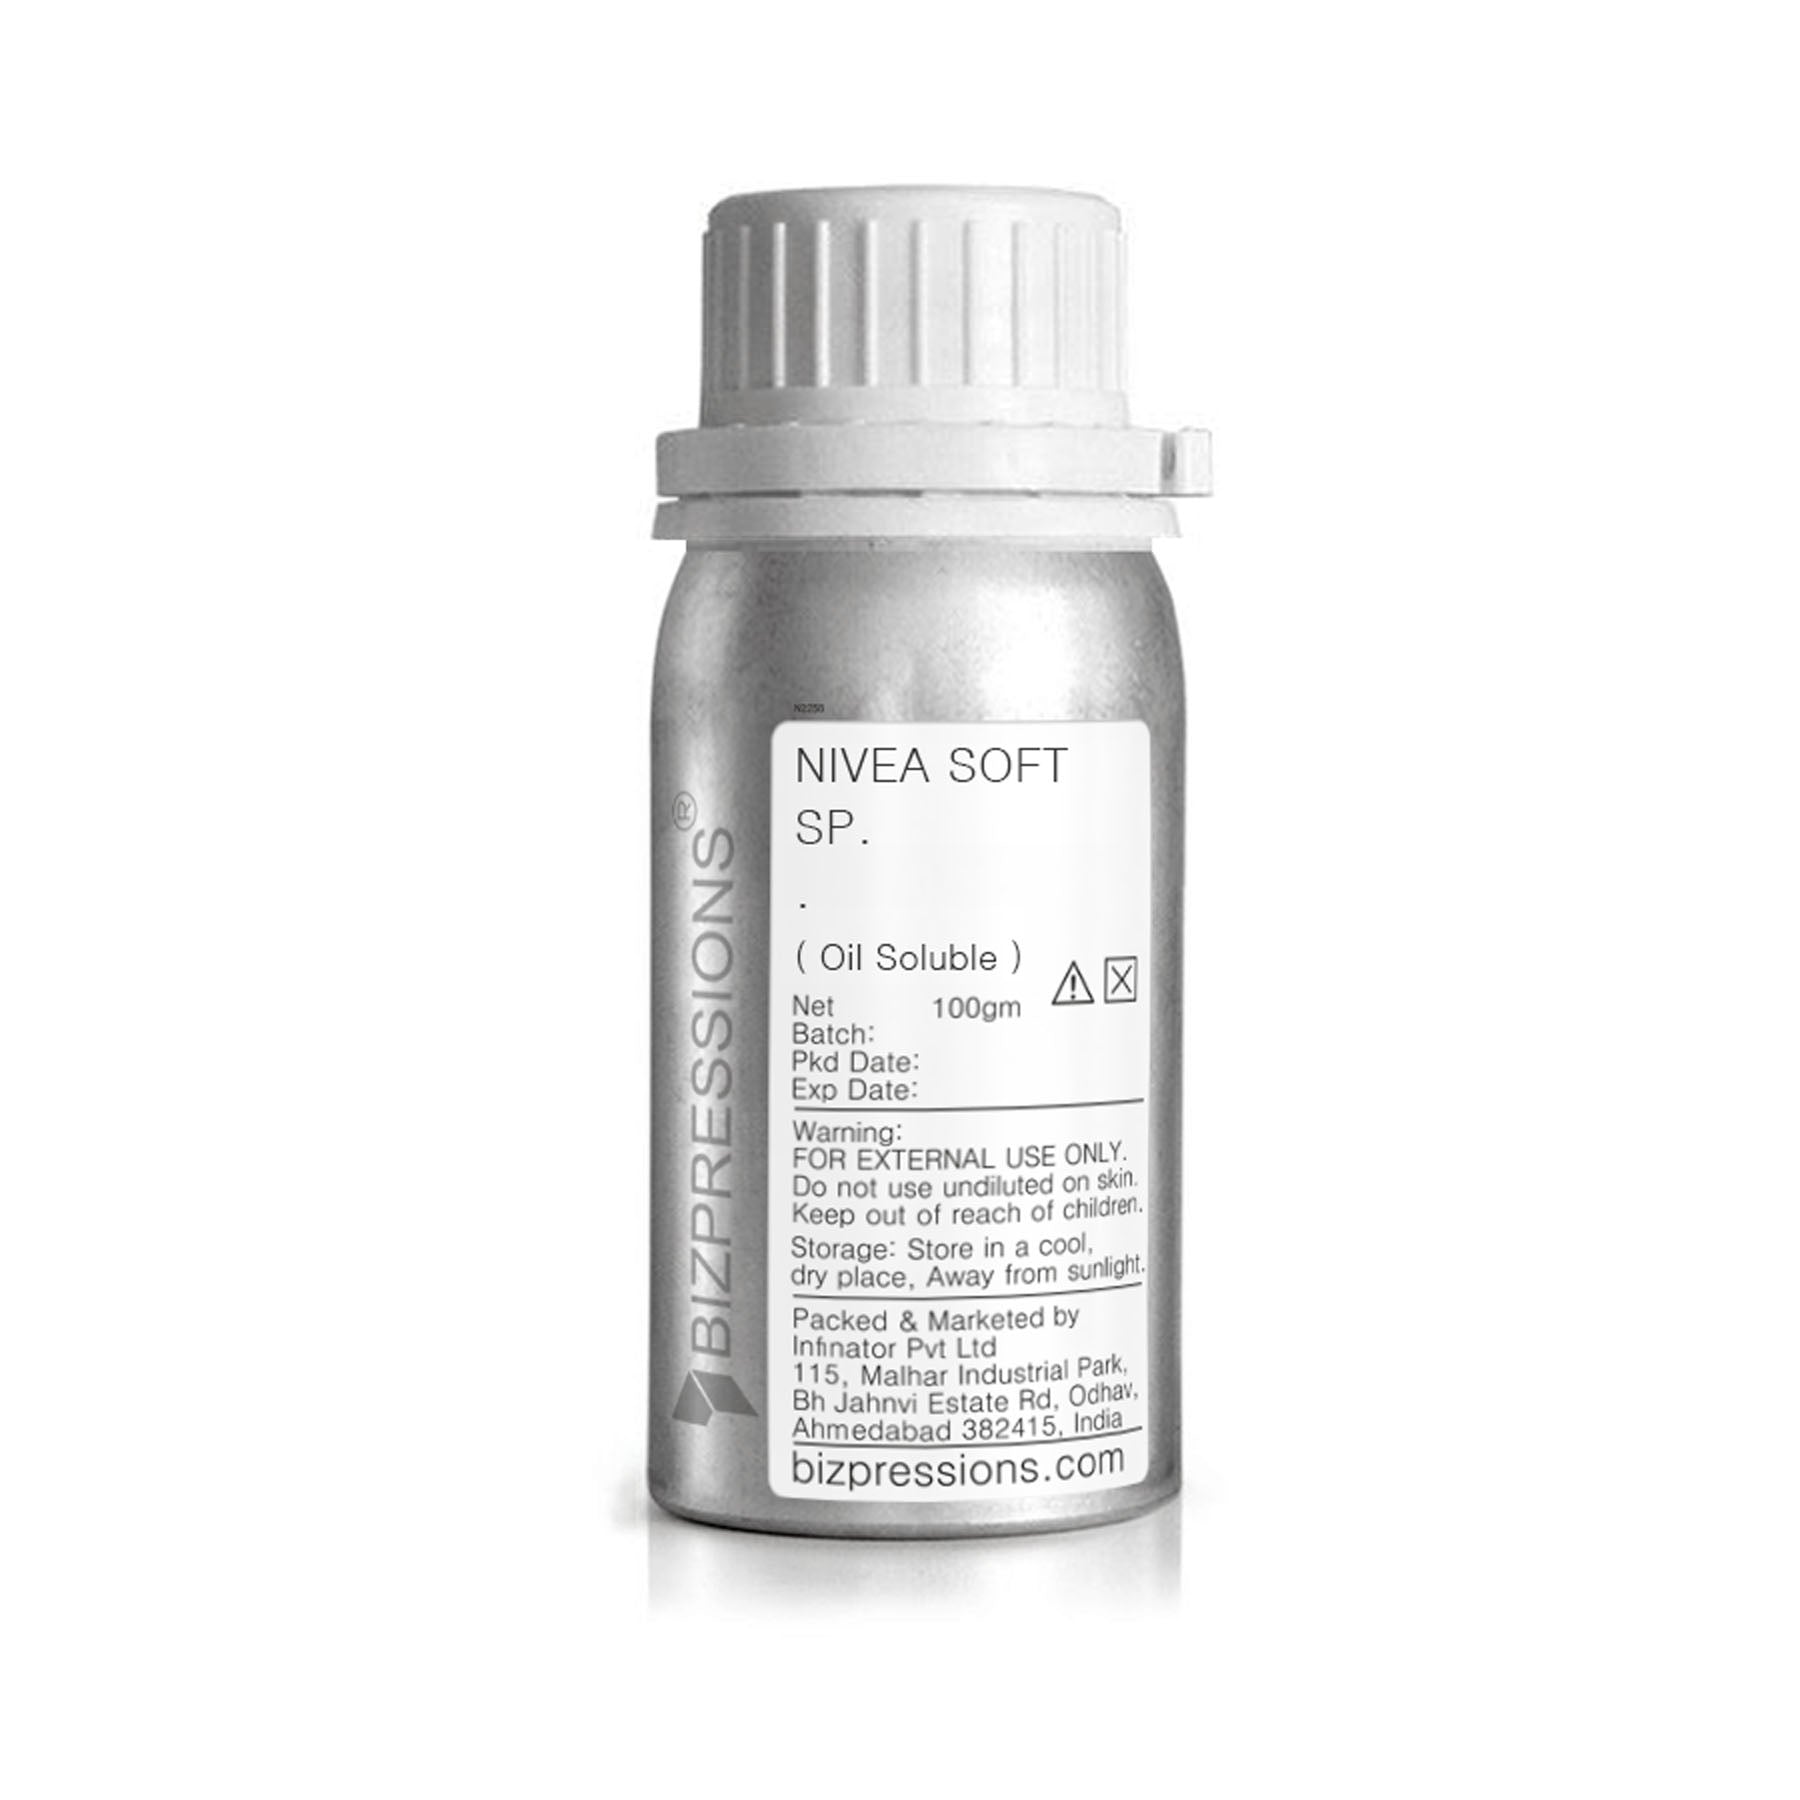 NIVEA SOFT SP. - Fragrance ( Oil Soluble ) - 100 gm